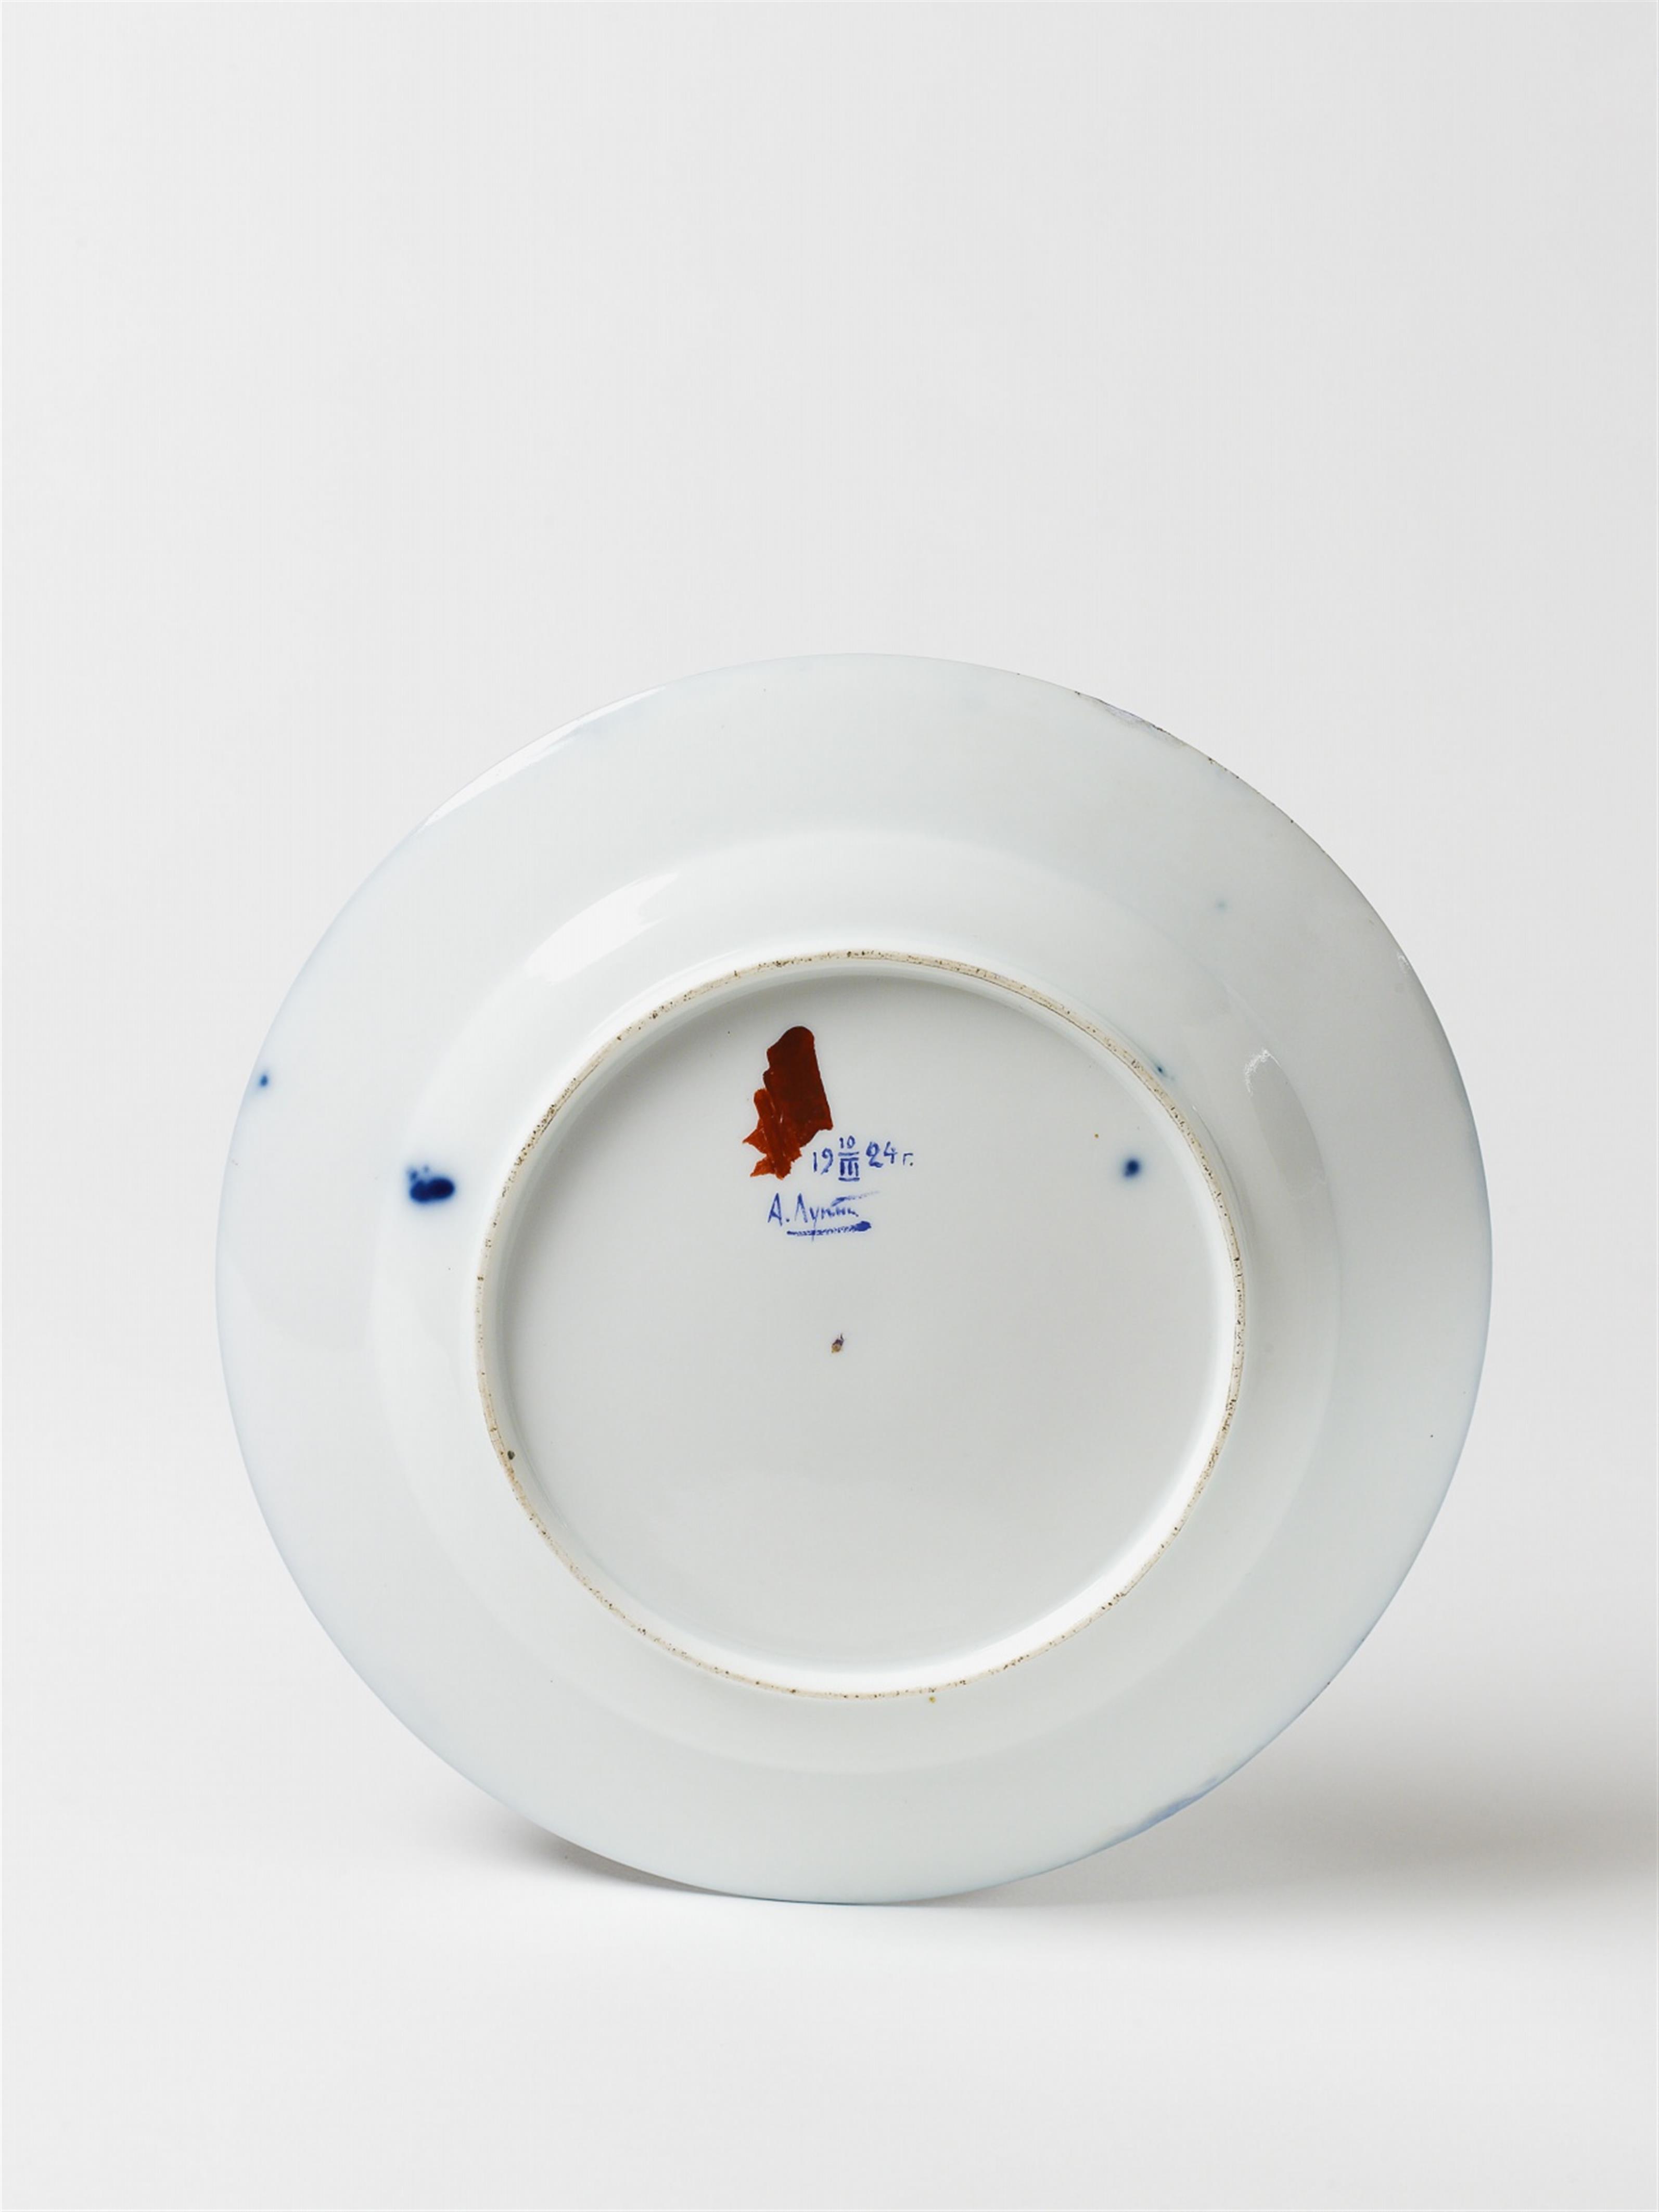 A commemorative porcelain plate with a sepia portrait of Lenin. - image-2